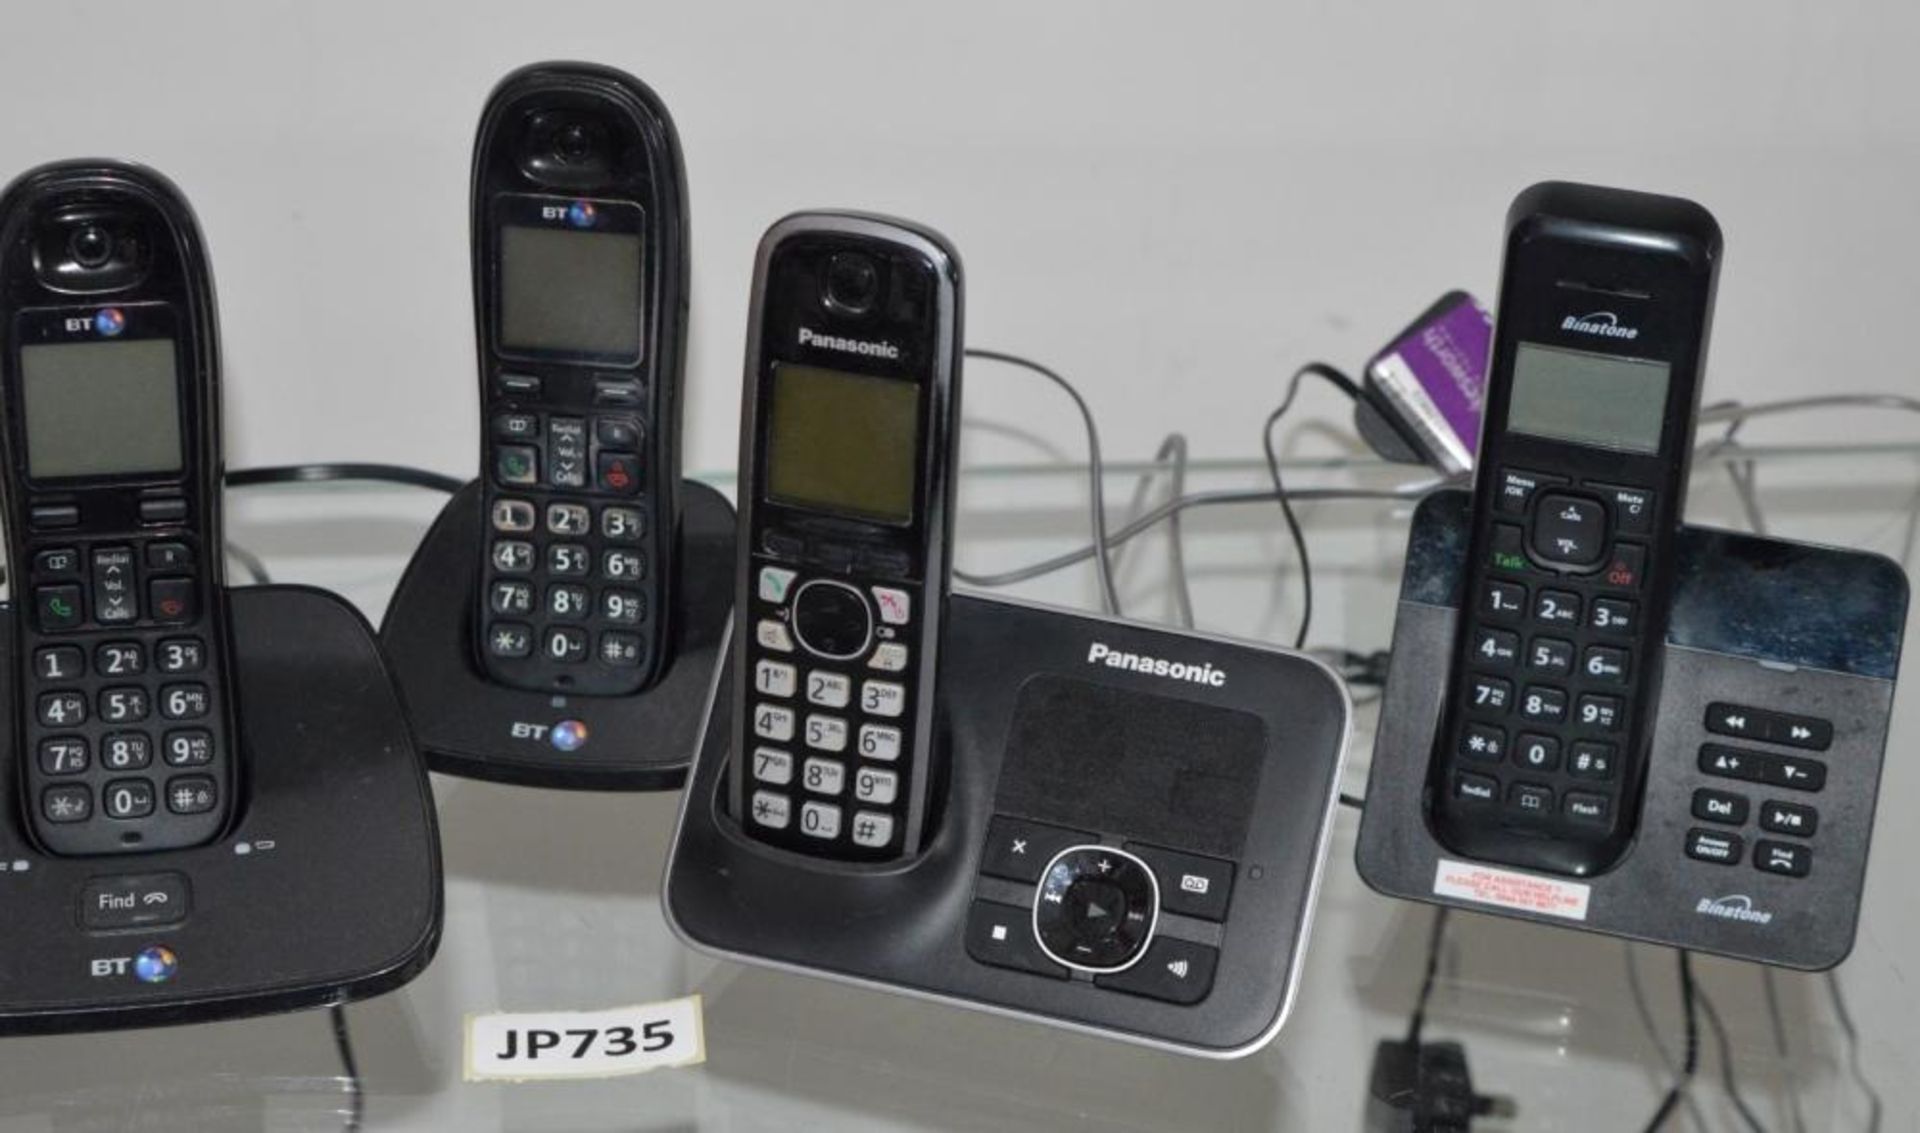 6 x Cordless Phone Handsets - Includes BT, Binatone and Panasonic Models - CL285 - Ref JP735 - Locat - Image 2 of 4